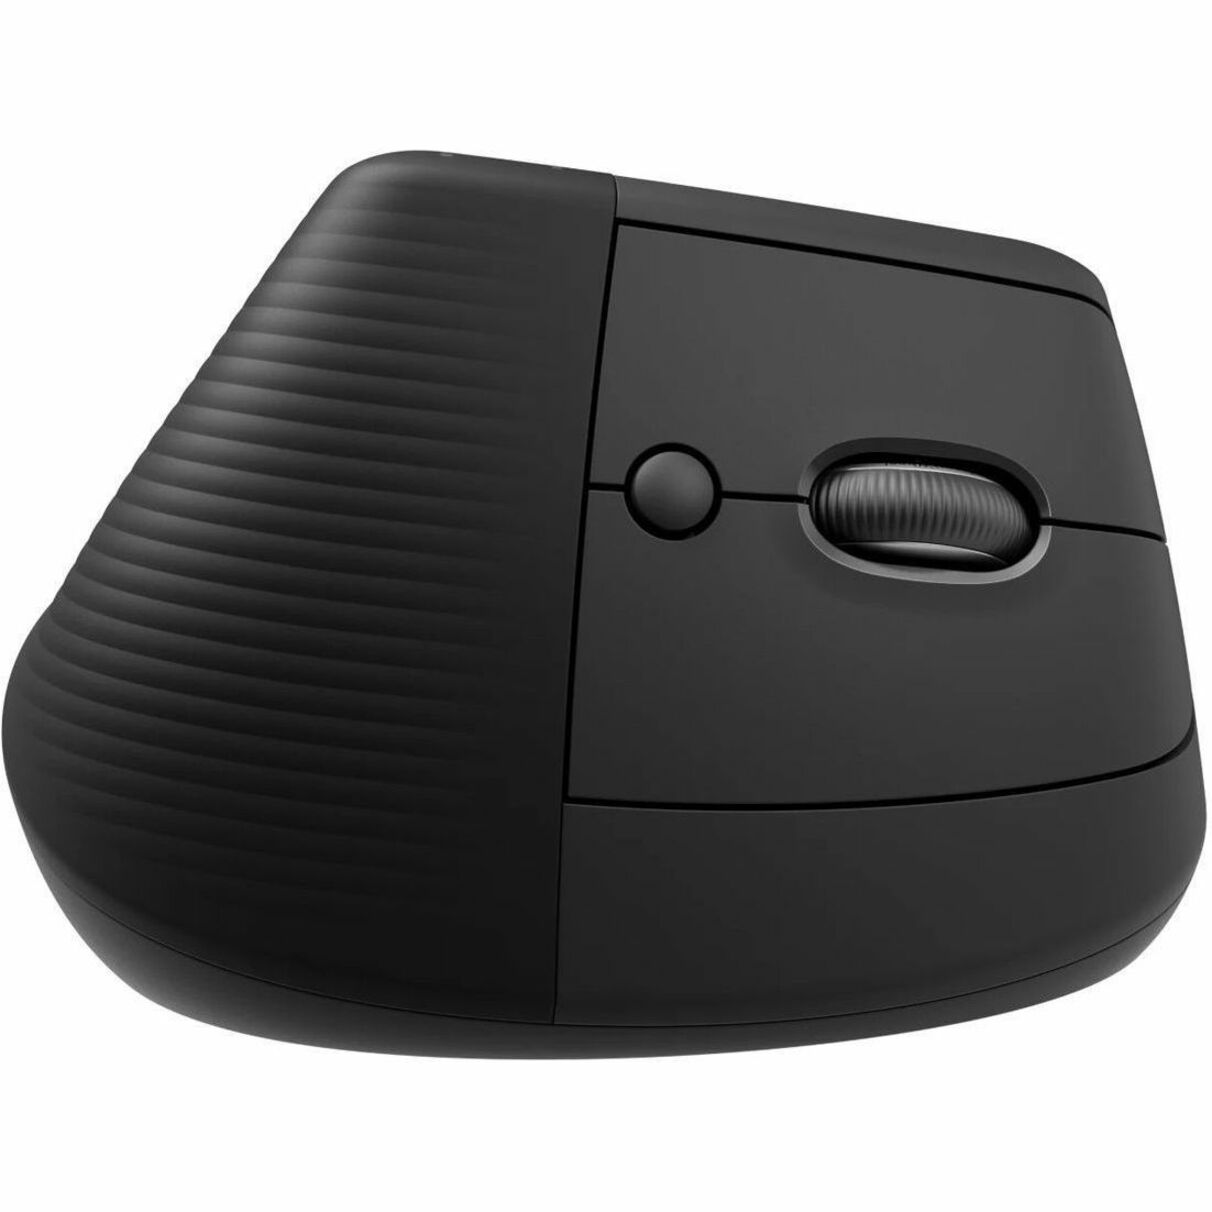 Logitech 910-006491 Lift Ergo Mouse, Graphite, Left-Handed, Small/Medium, Wireless